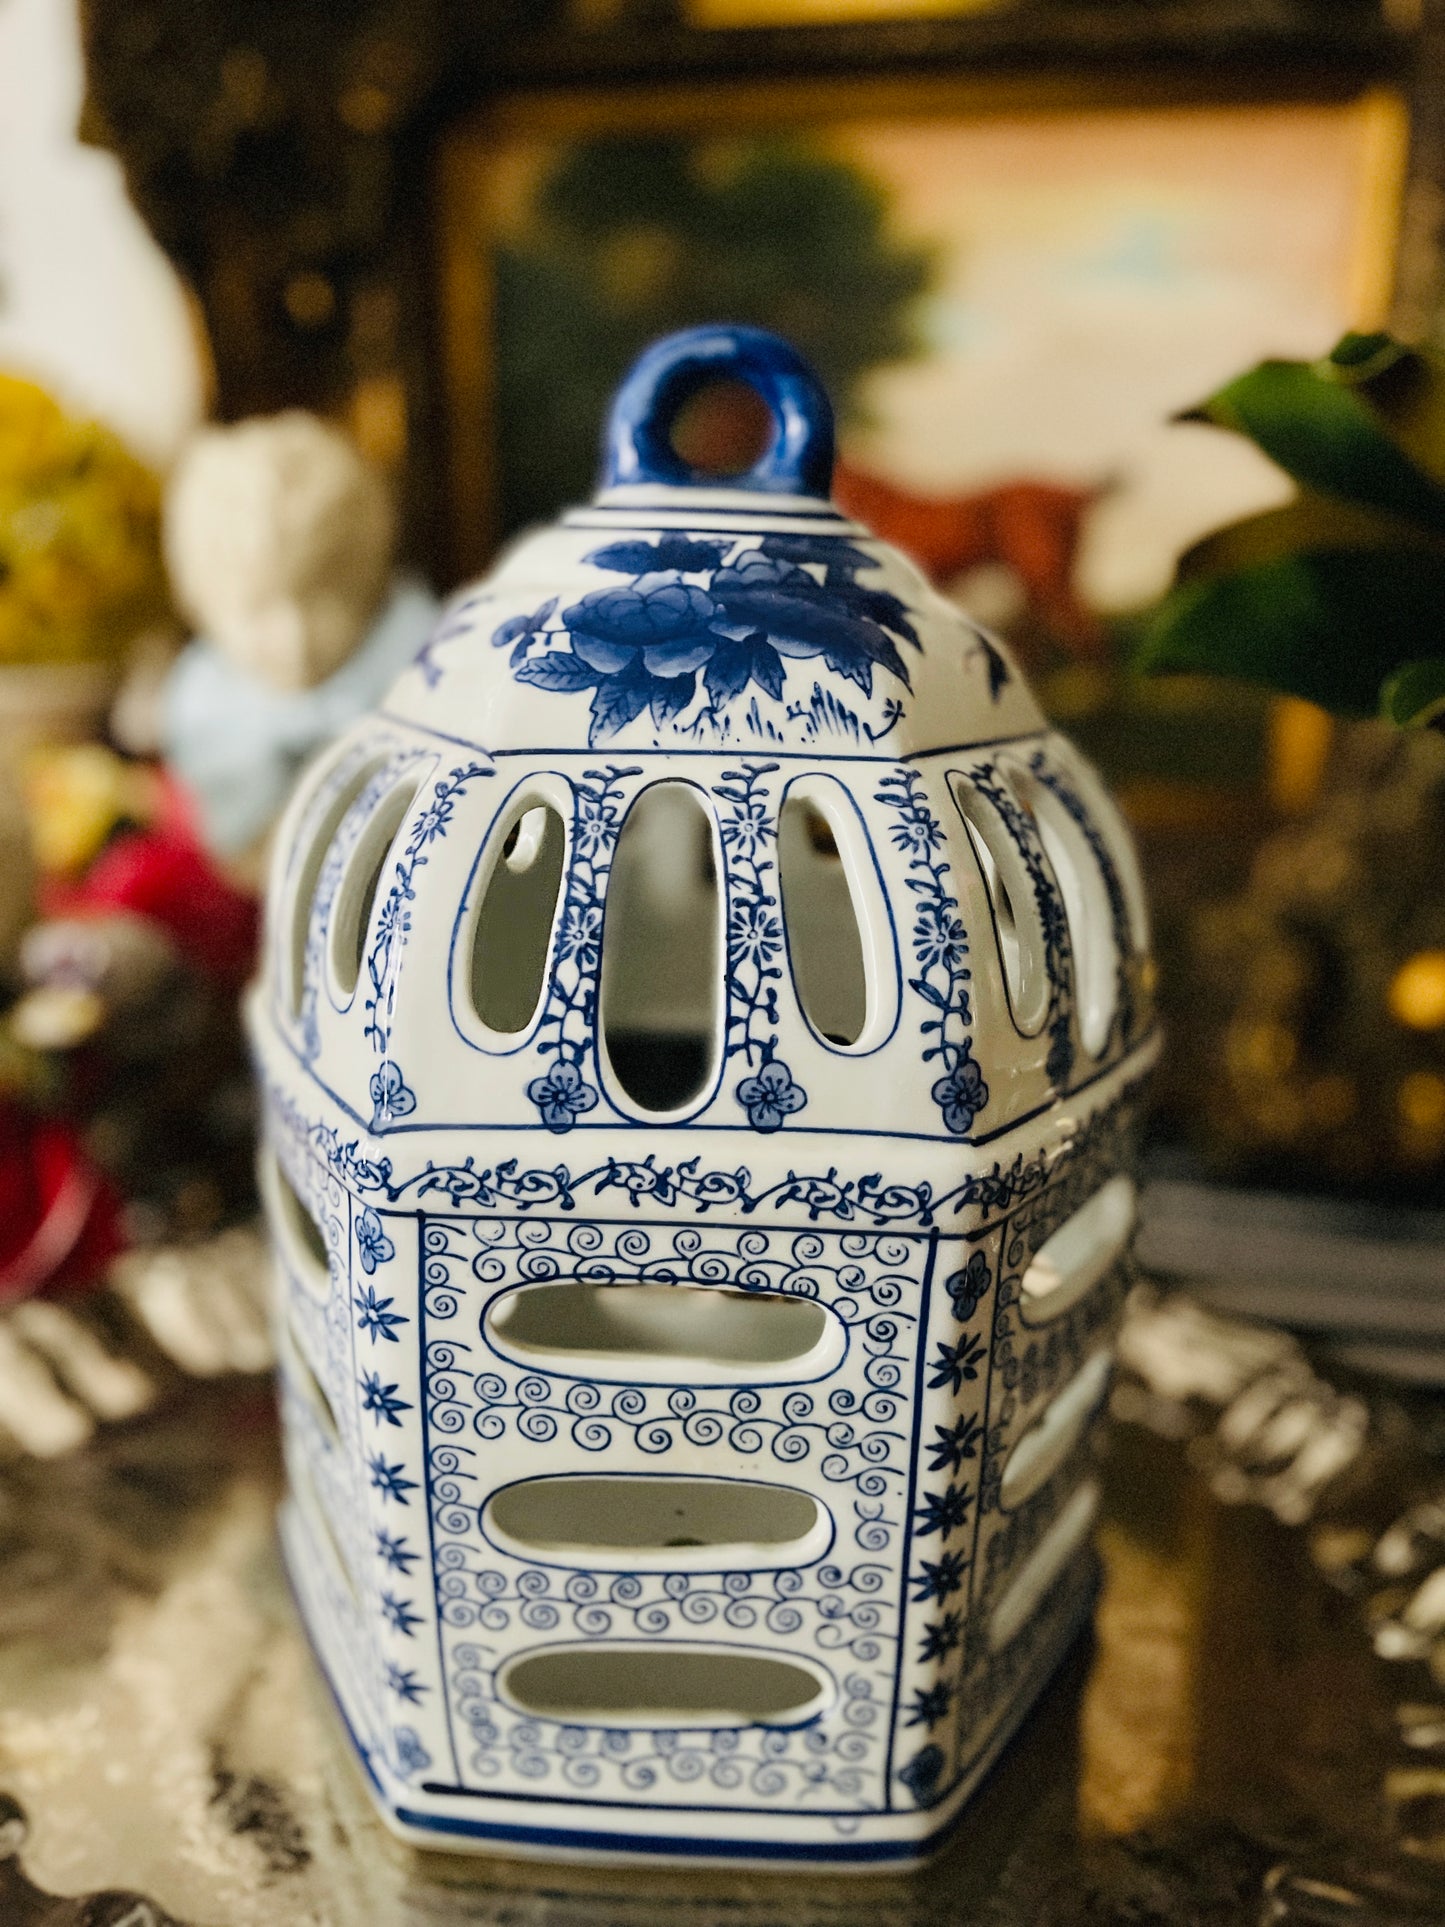 Chinoiserie Blue and White Porcelain Bird House/Feeder/Lantern